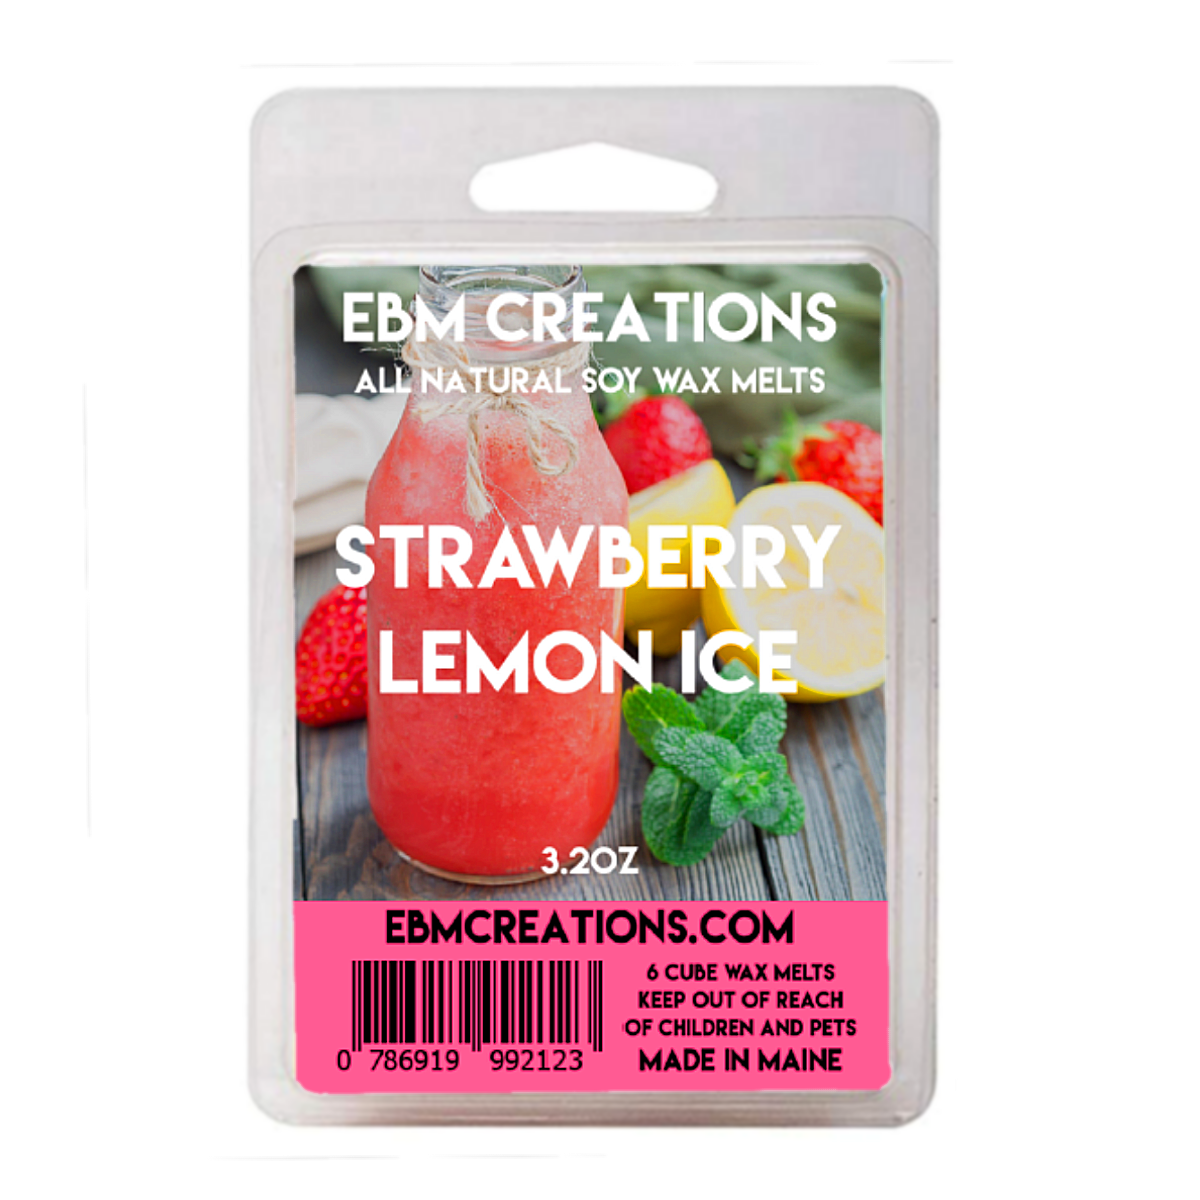 Strawberry Lemon Ice - 3.2 oz Clamshell